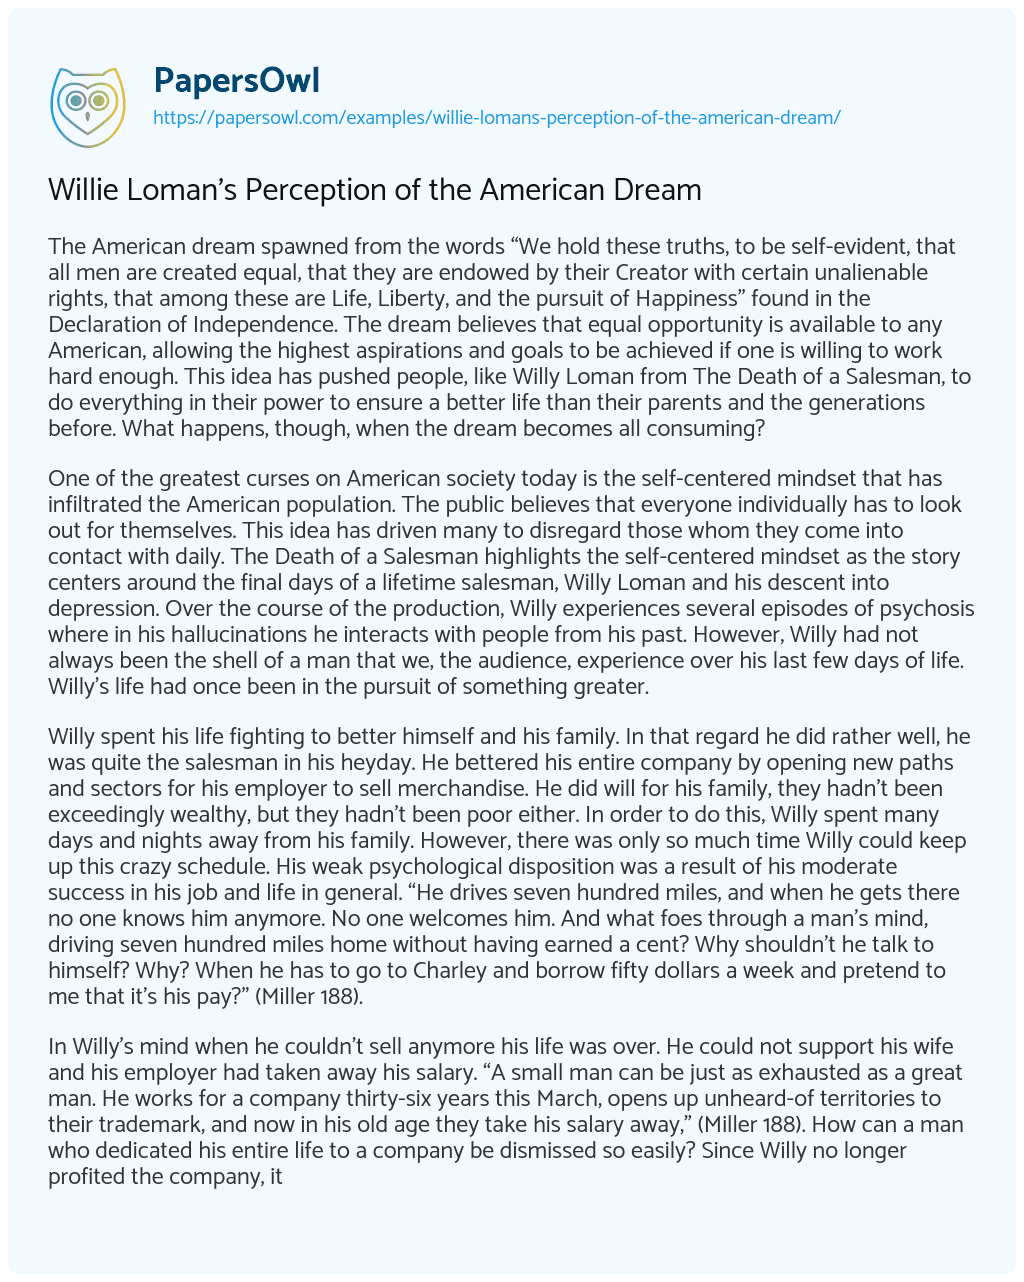 Essay on Willie Loman’s Perception of the American Dream